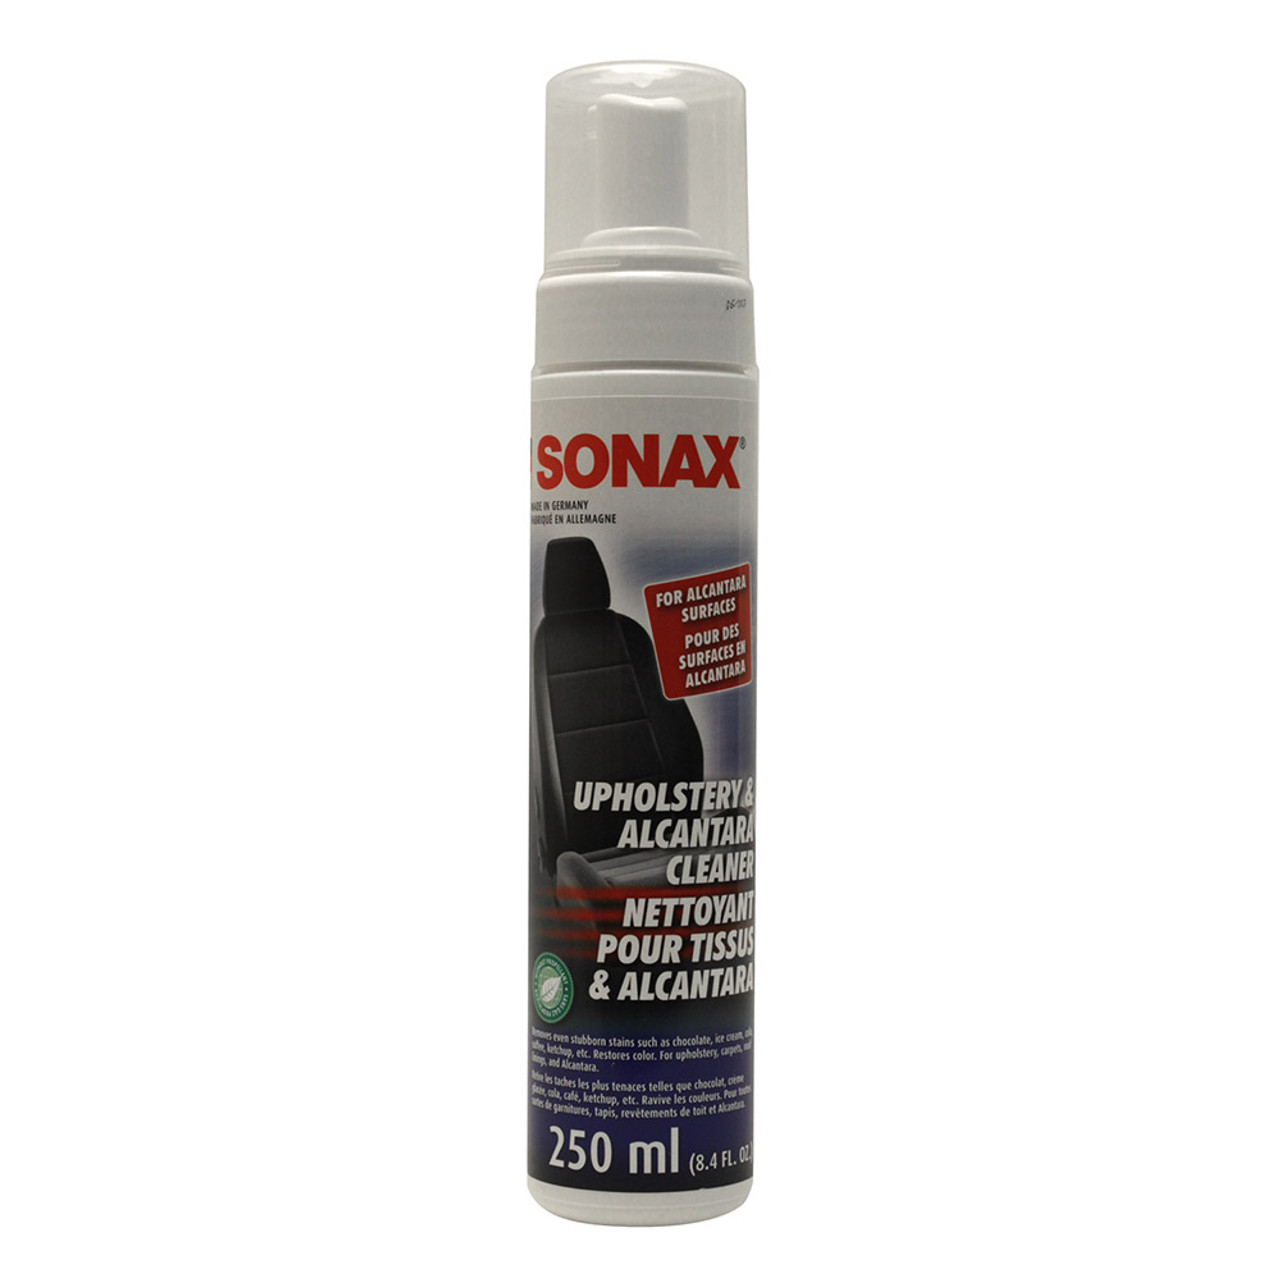 Sonax Xtreme Upholstery & Alcantara Cleaner - Limpieza de